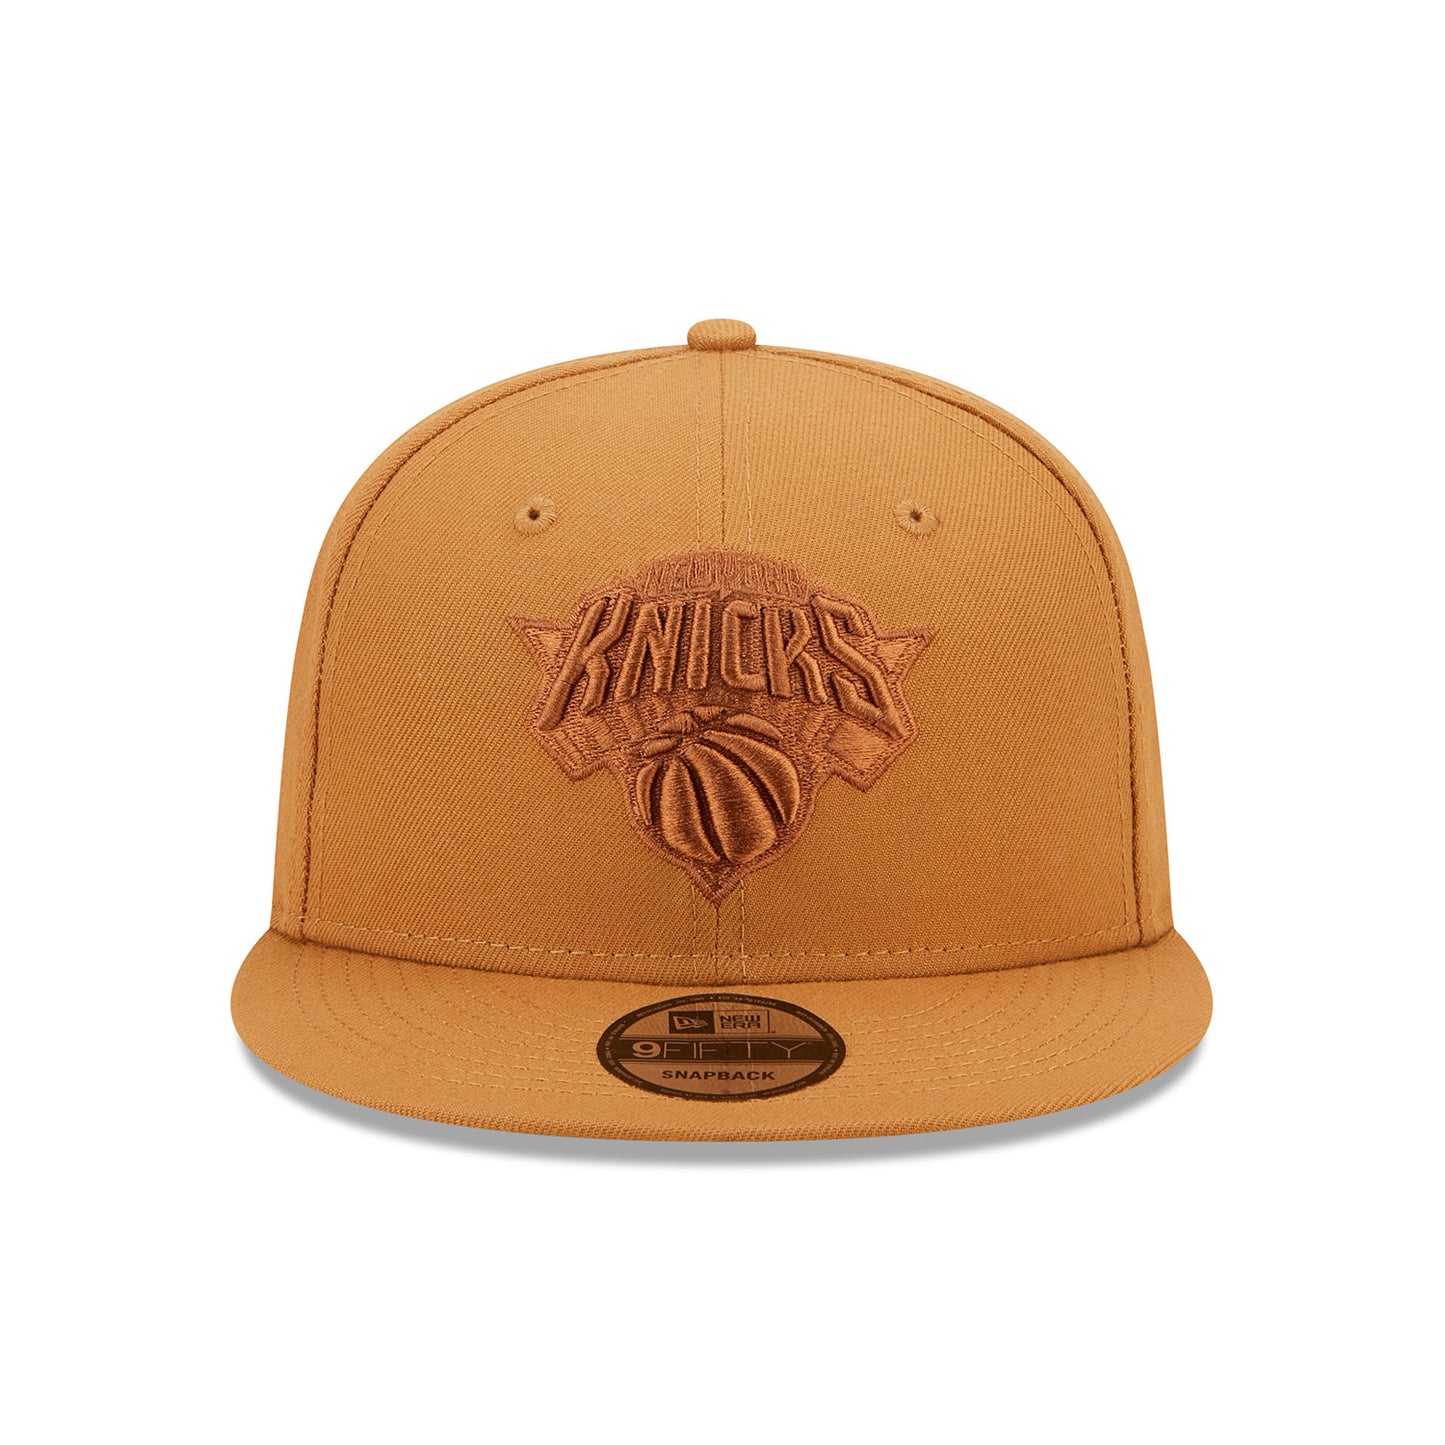 New Era Knicks Light Bronze Snapback Hat - Front View